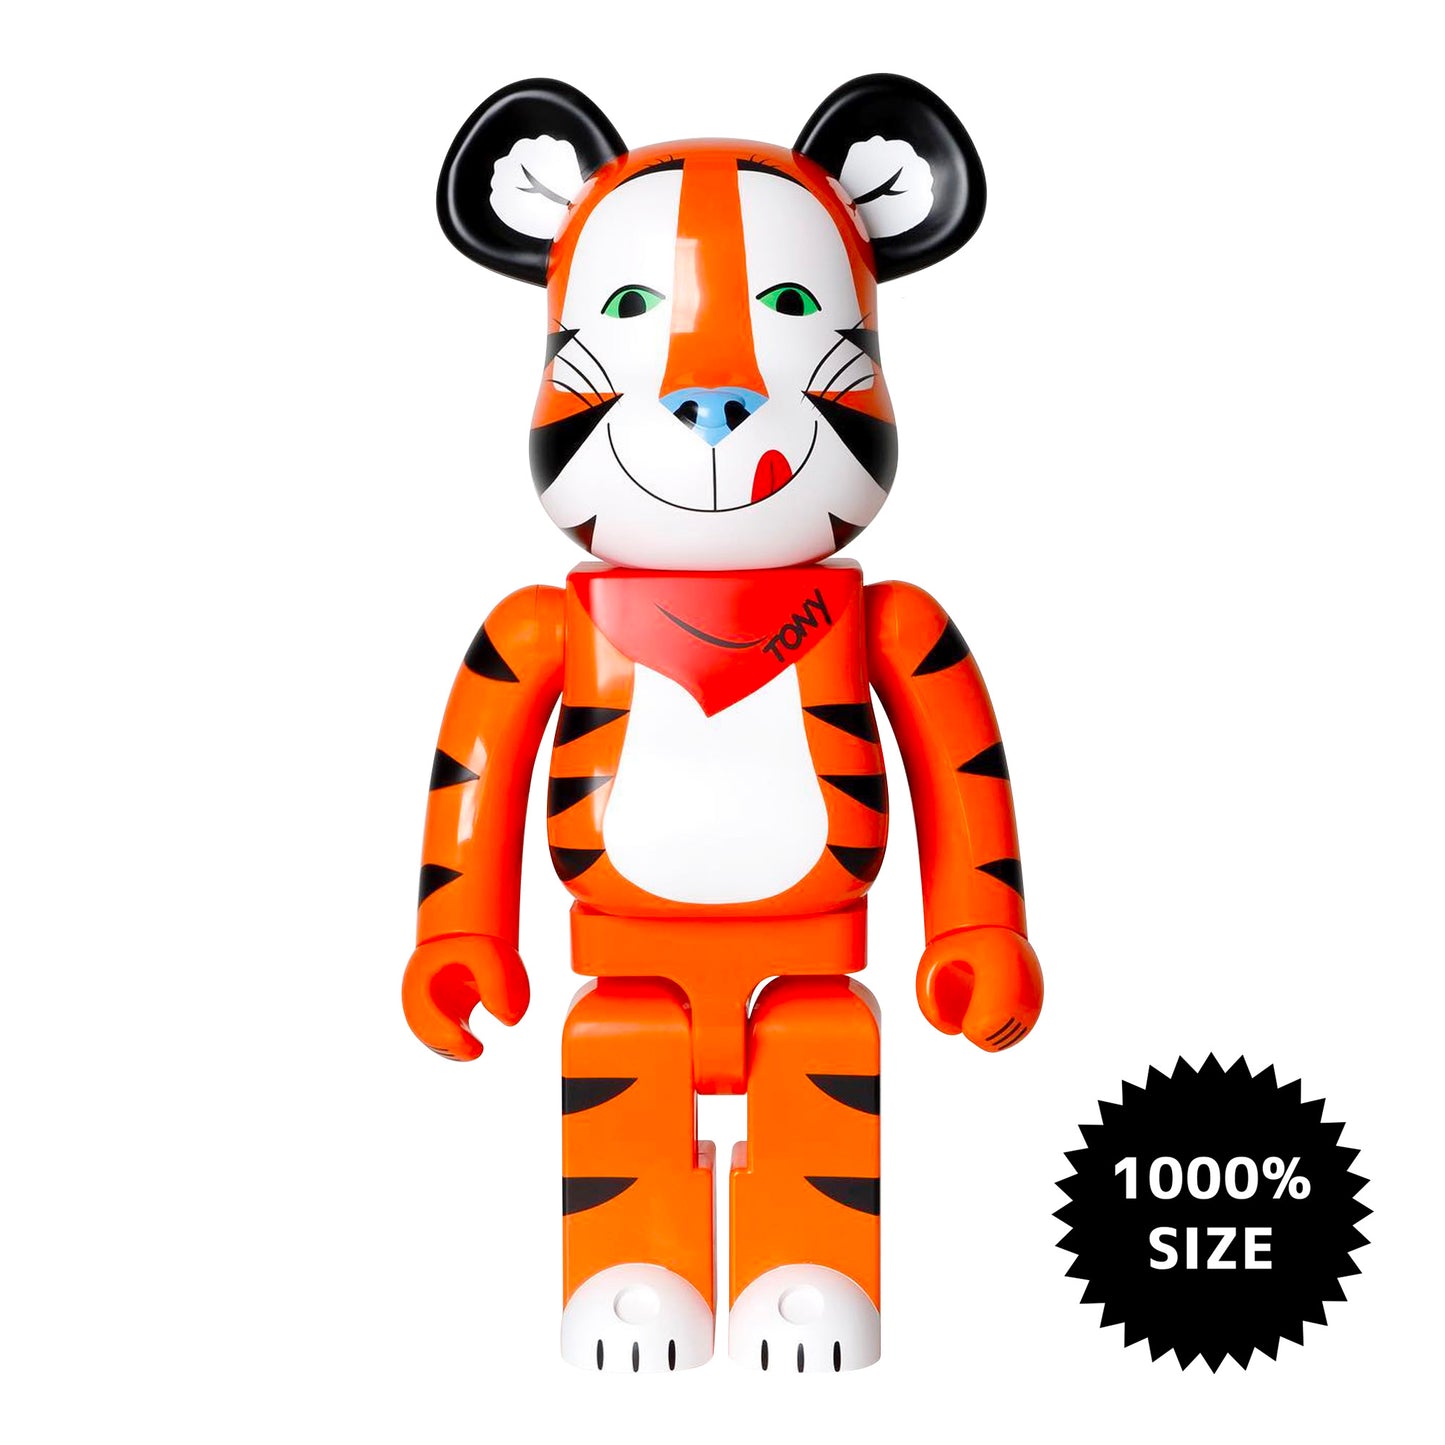 MEDICOM TOY: BE@RBRICK - Tony The Tiger Vintage 1000%